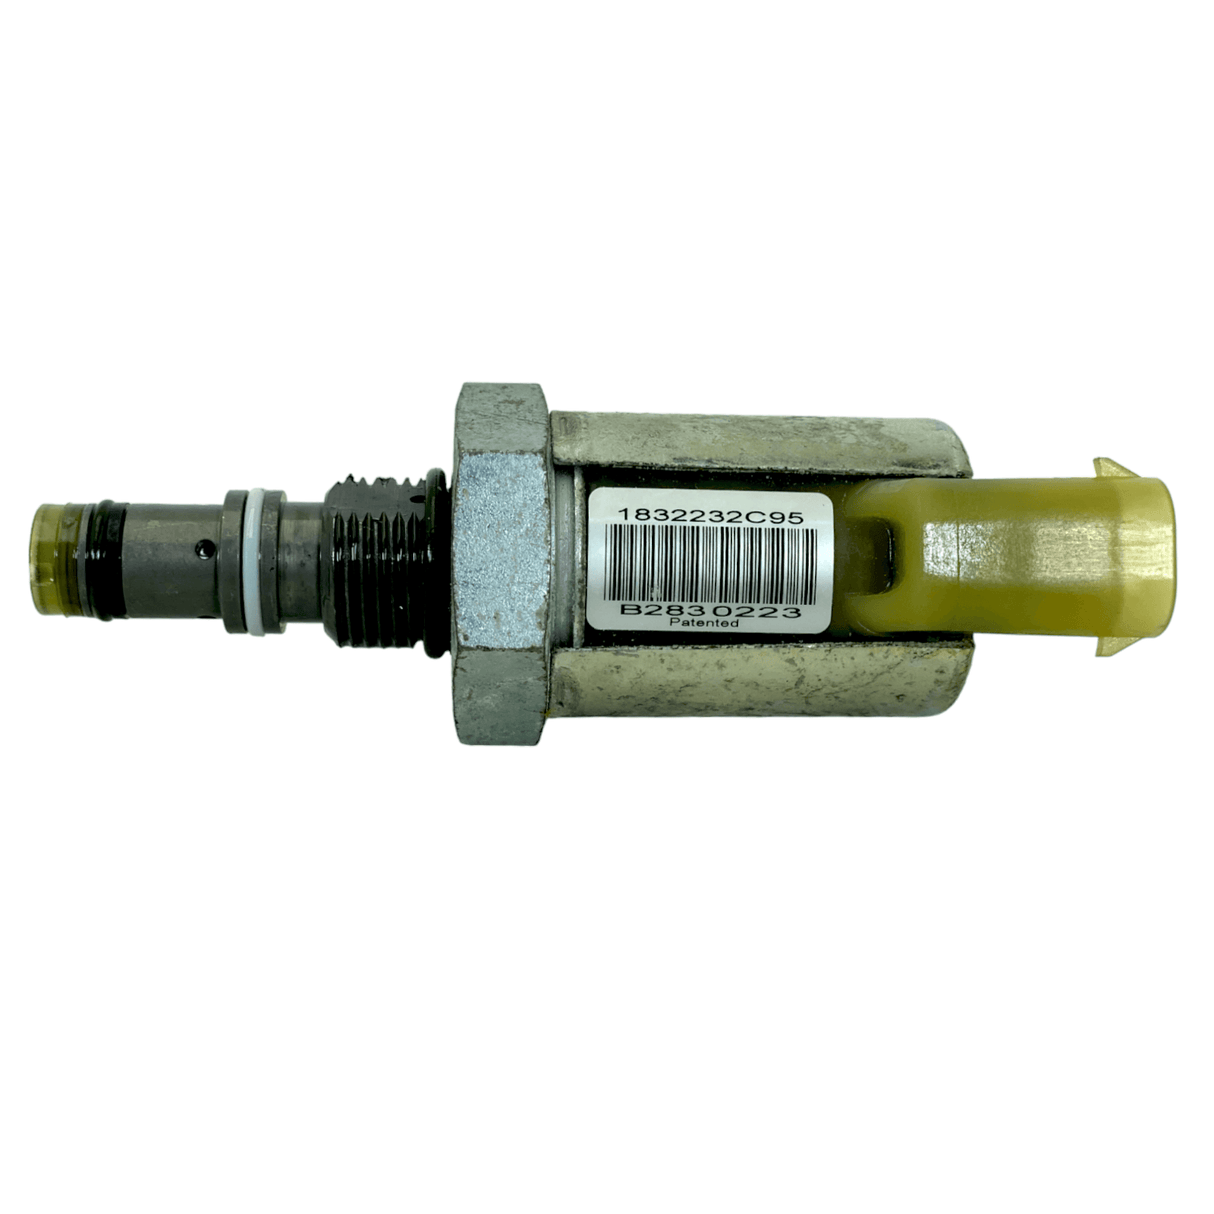 1832232C95 Genuine International Valve Assy Fuel Injector Pressure Regulator.